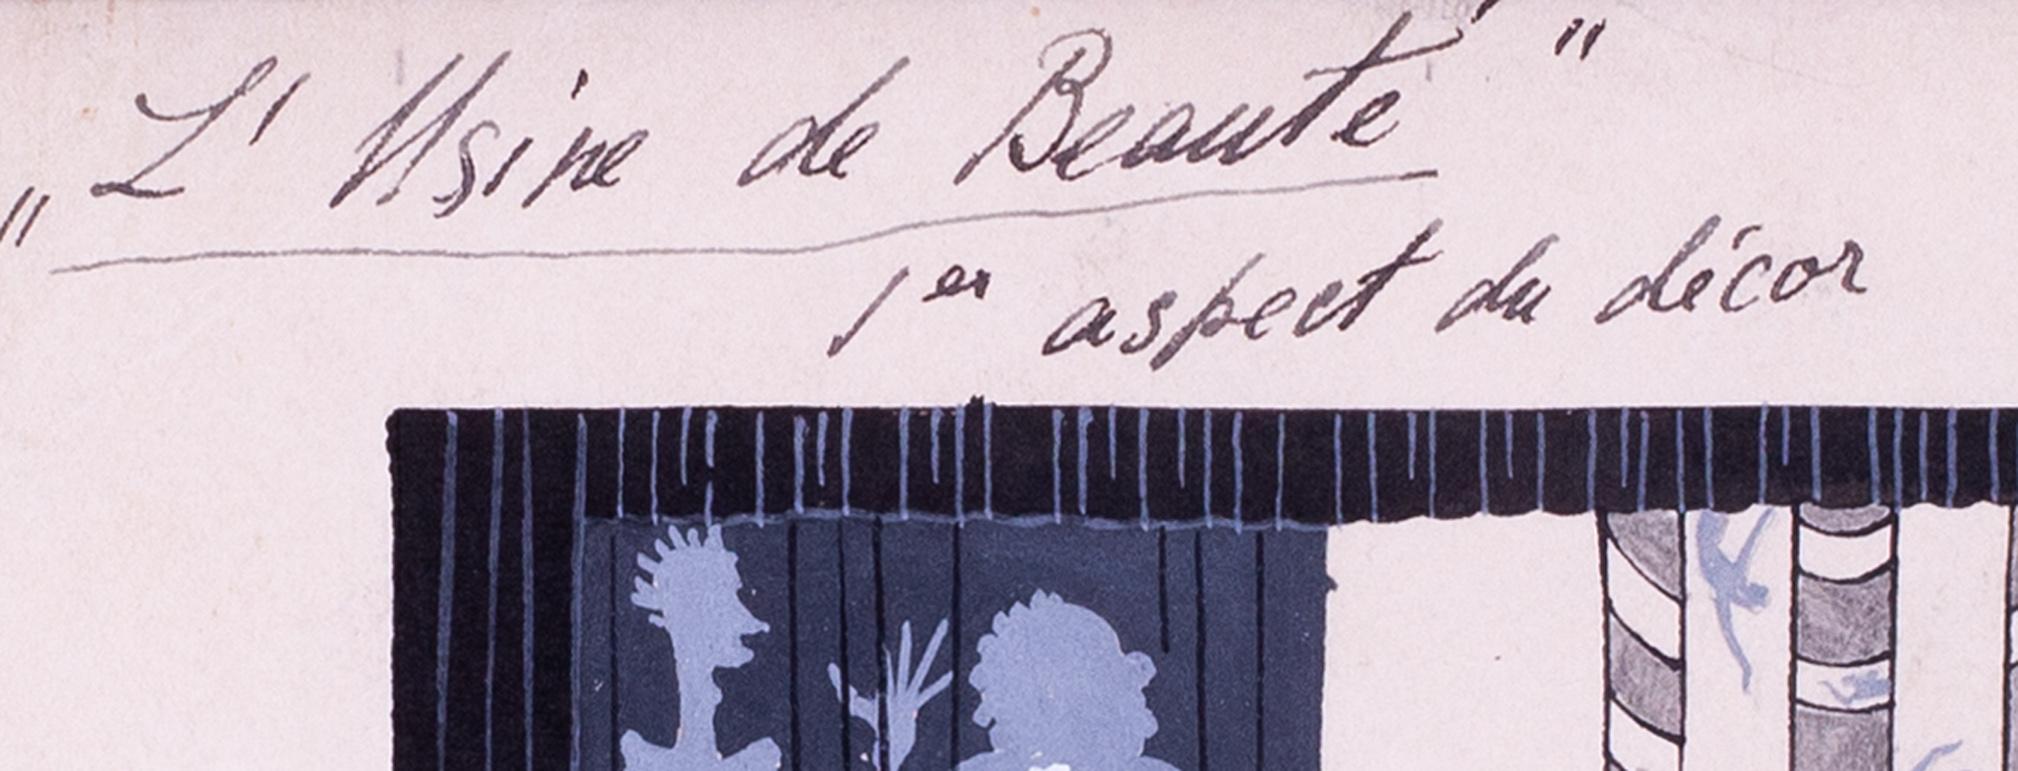 Romain de Tirtoff, genannt Erte (französisch/russisch, 1892-1990)
L`Usine de Beaute - 1er aspect du decor
Tintenschreiber
Signiert mit Atelierstempel und gestempelter Signatur (rechts unten)
5 x 7 Zoll (12,8 x 17,8 cm)
Provenienz :
Aus der Sammlung